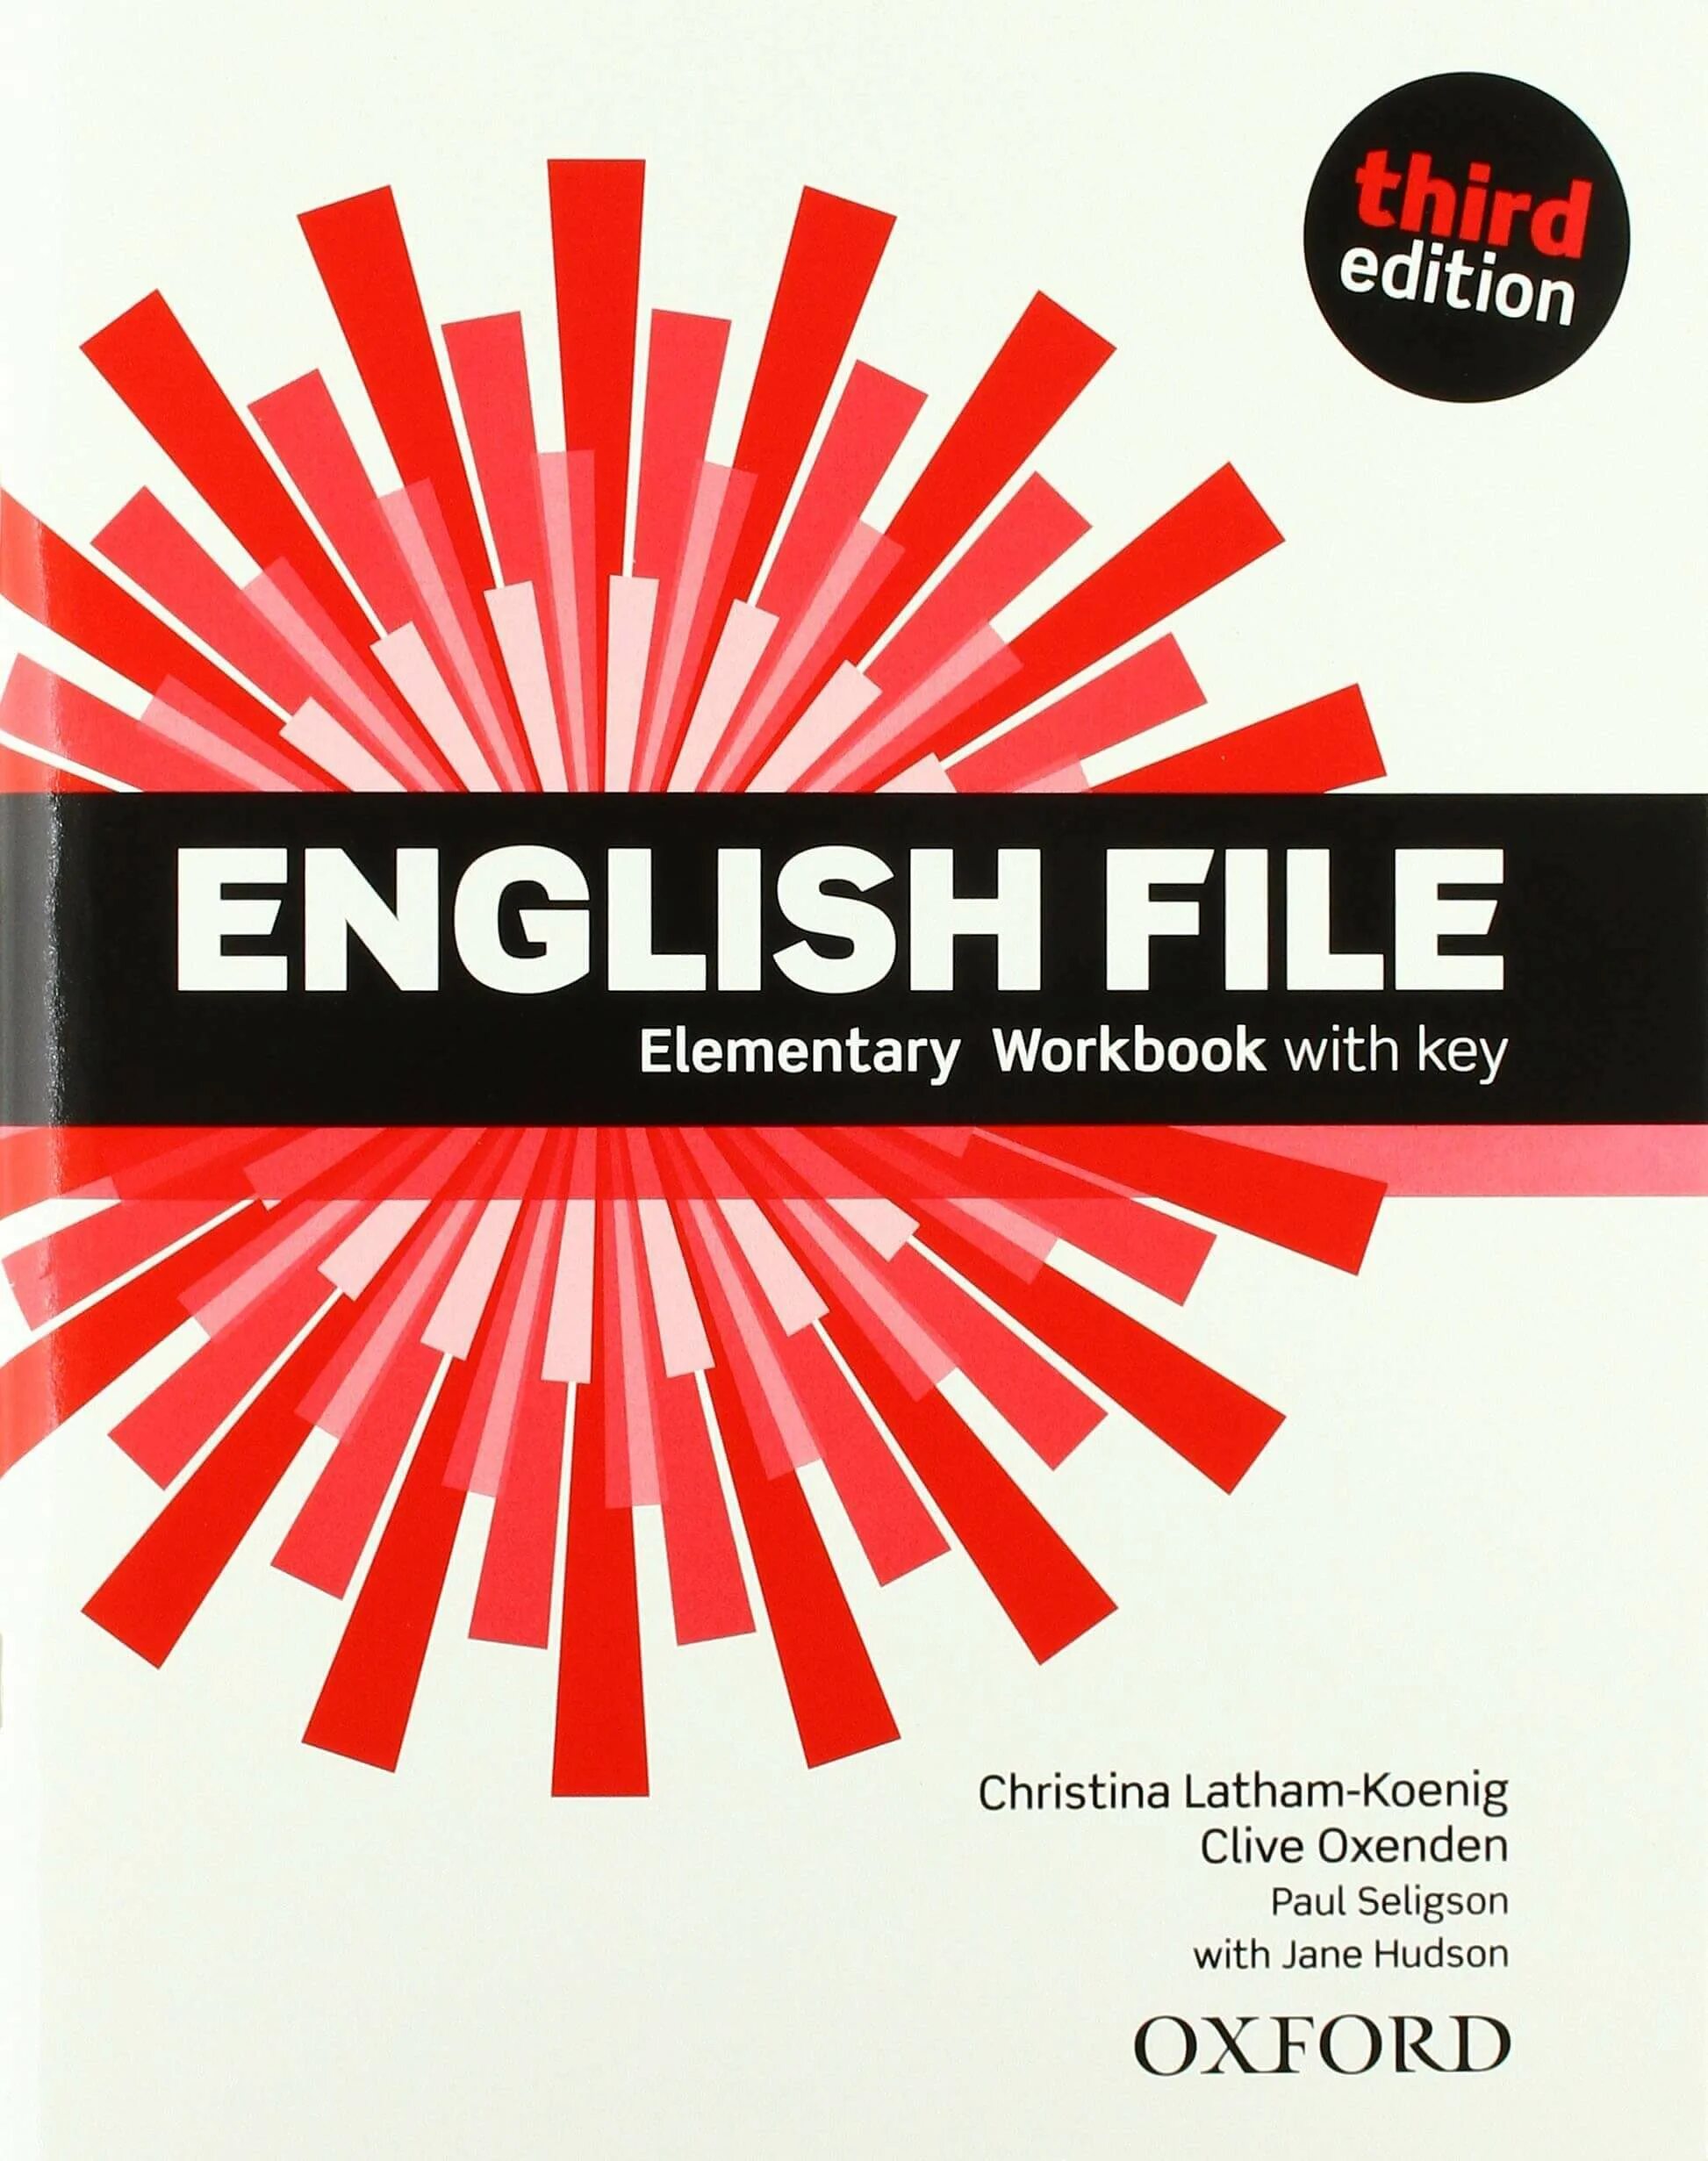 English file Elementary 3rd Edition. Английский Оксфорд учебник English file. Инглиш файл элементари 3 издание. New English file Elementary третье издание. Elementary books 3 edition